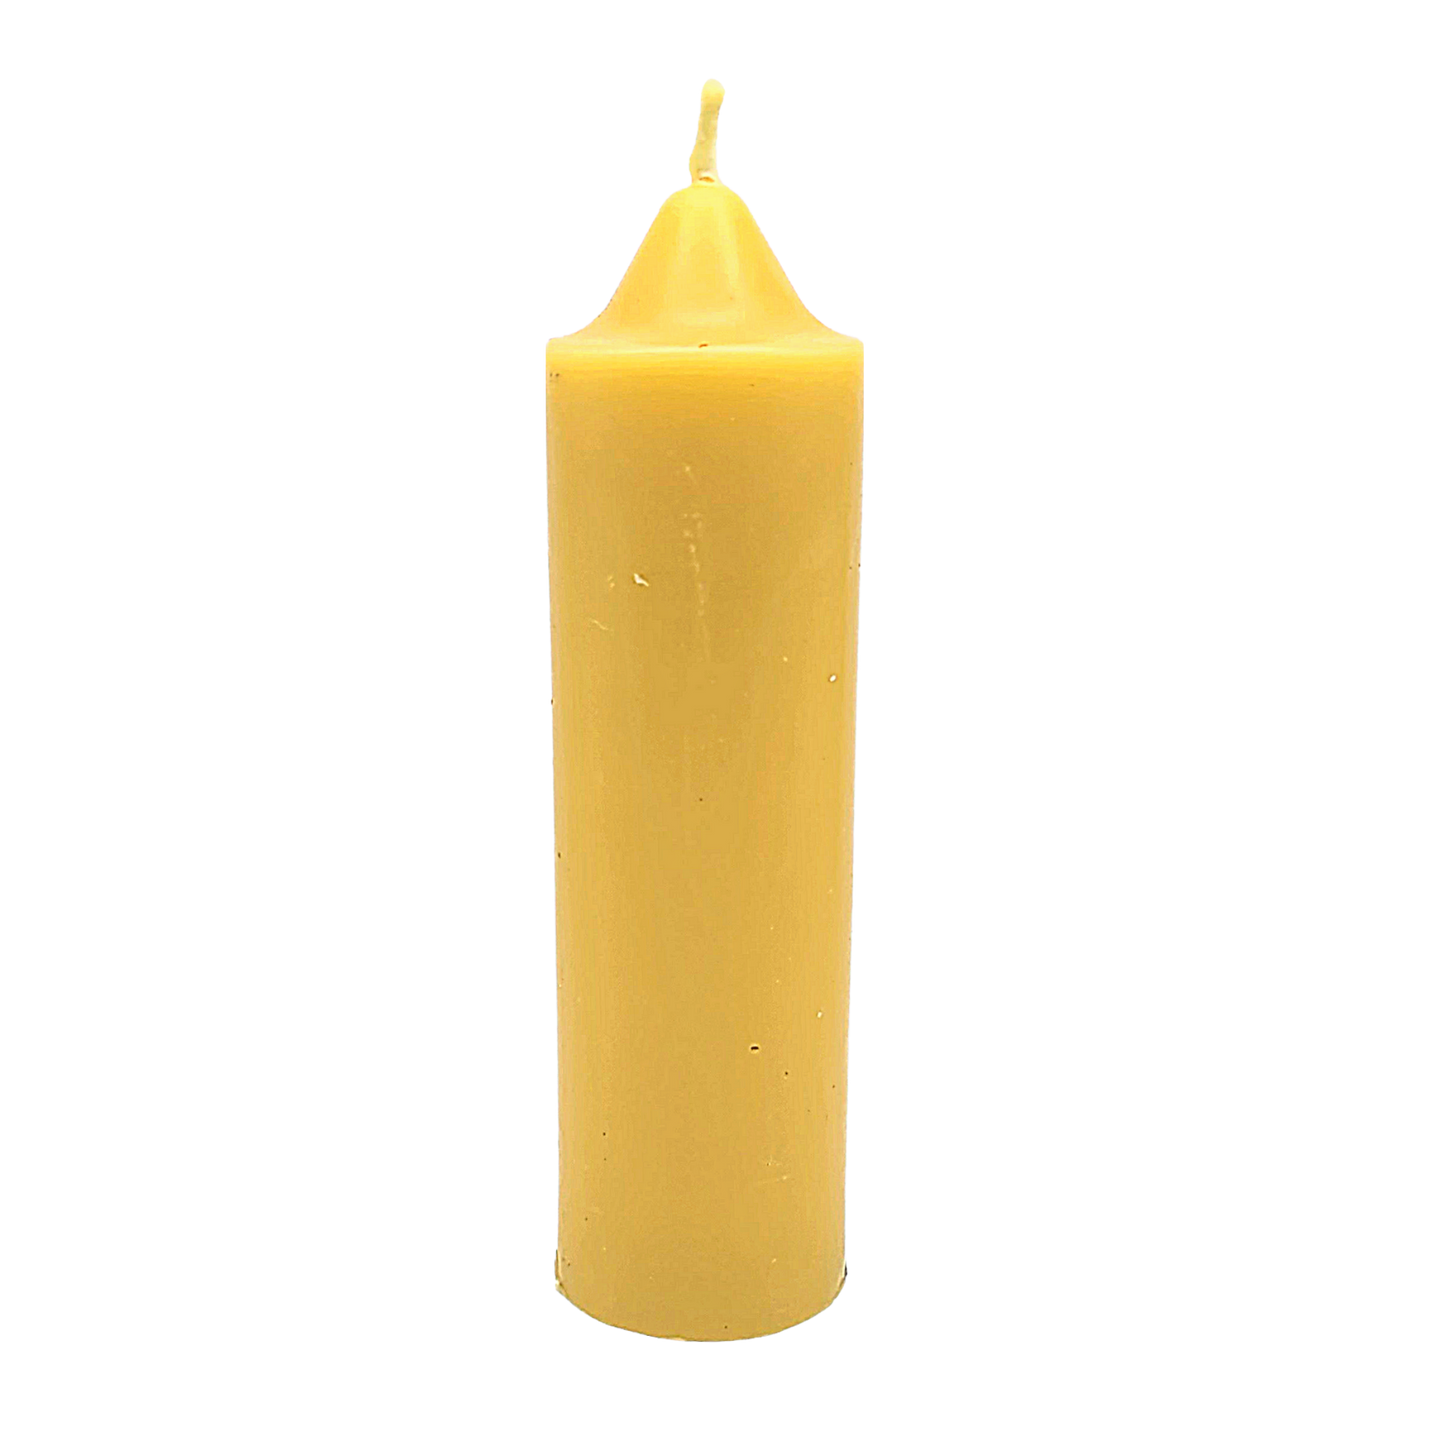 1 Emergency Beeswax Candle